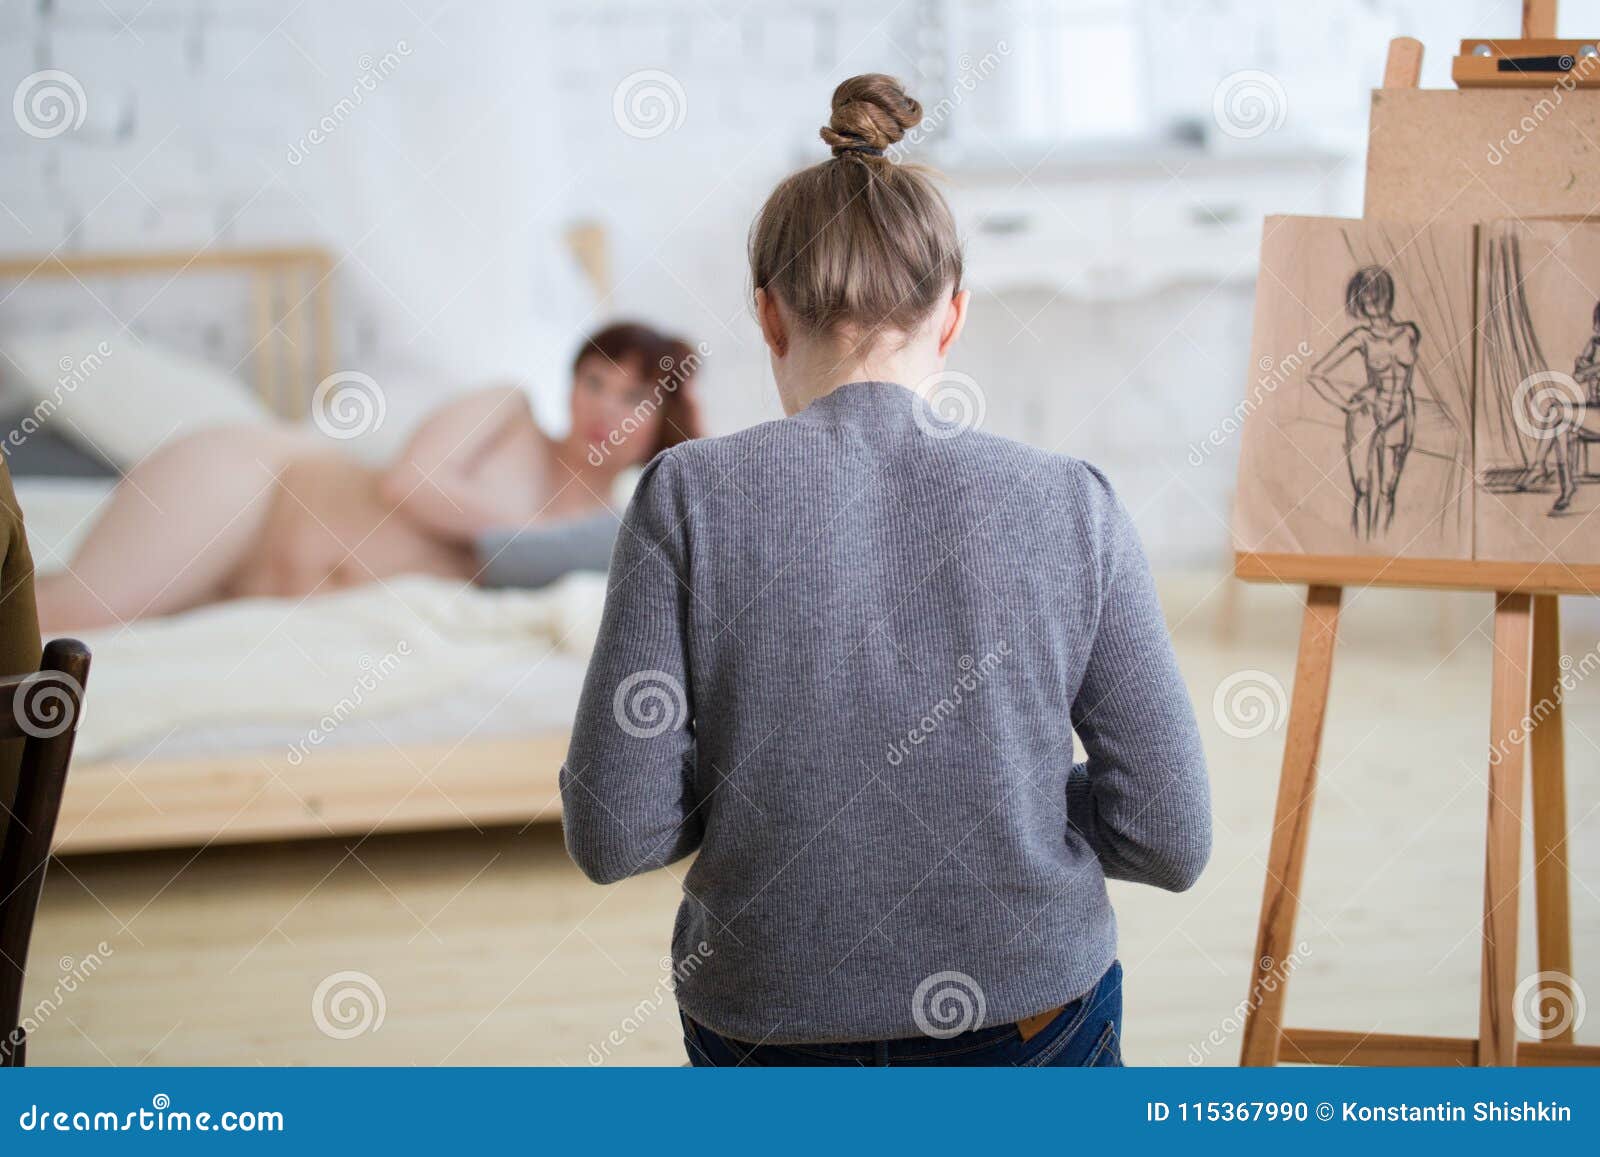 Nude Female Art Model Class